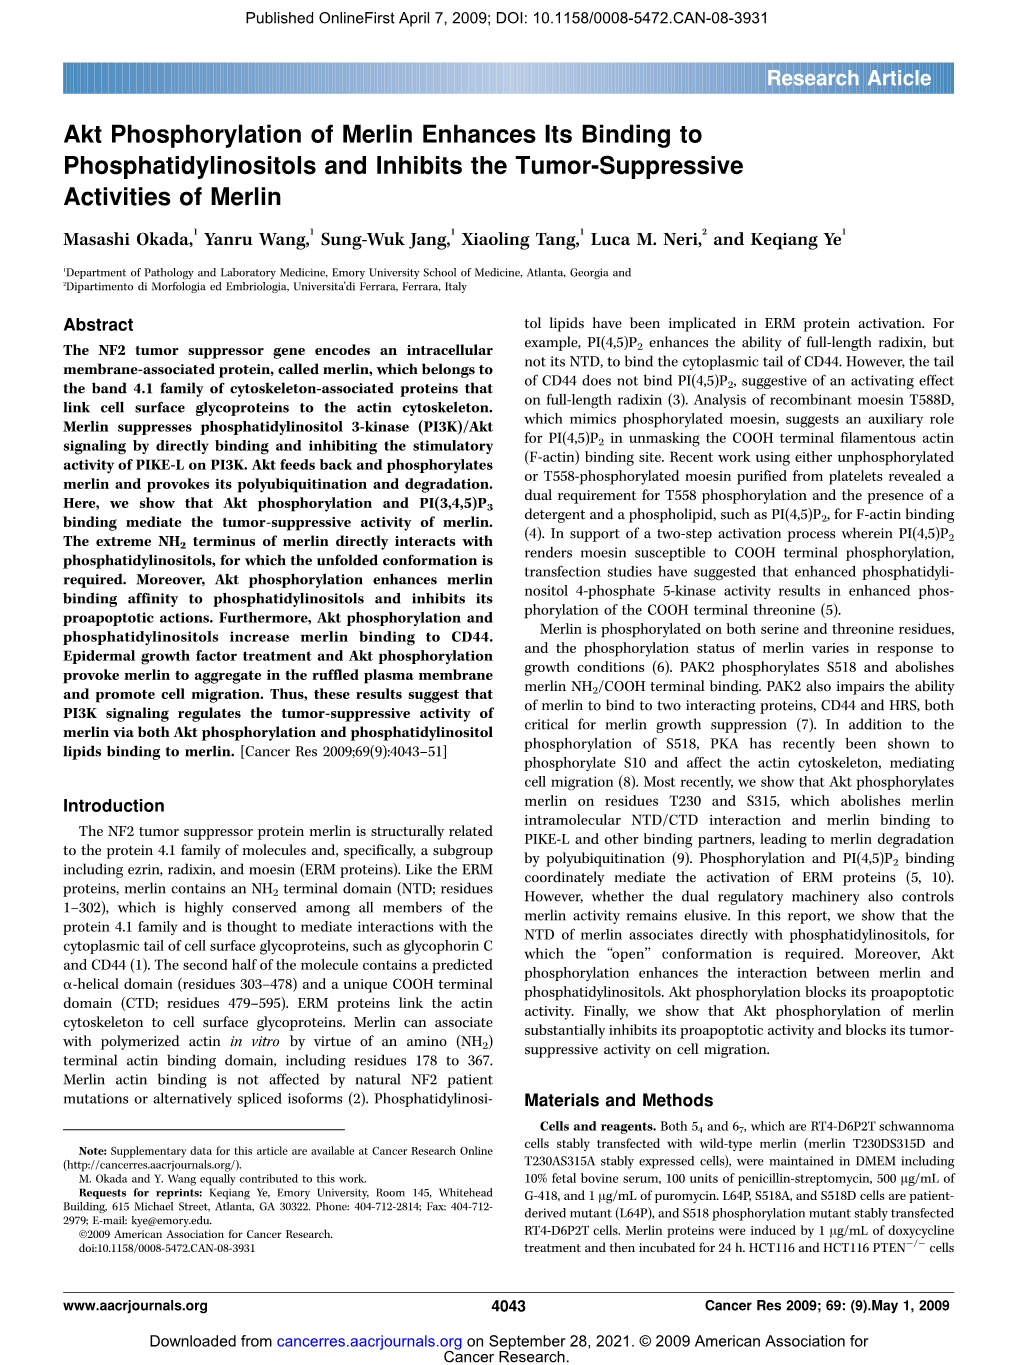 Akt Phosphorylation of Merlin Enhances Its Binding to Phosphatidylinositols and Inhibits the Tumor-Suppressive Activities of Merlin